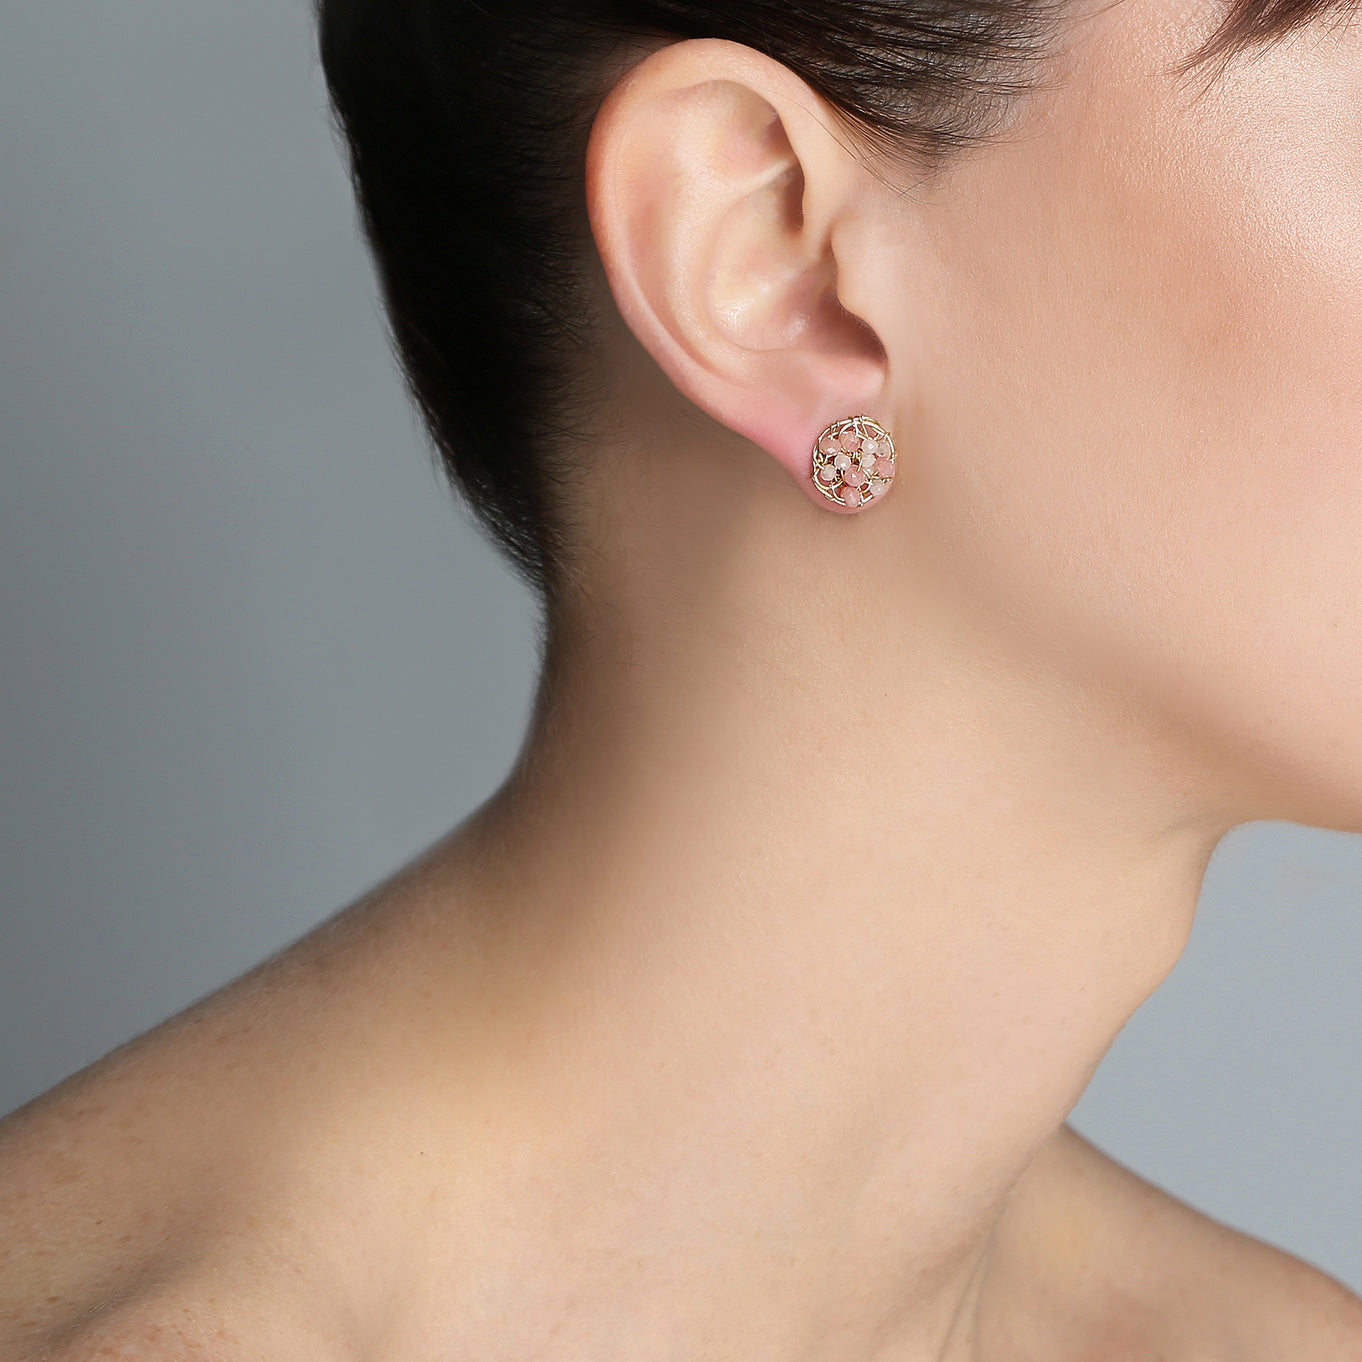 Aura Stud Earrings #1 (10mm) - Rose Mix Gems Earrings TARBAY   